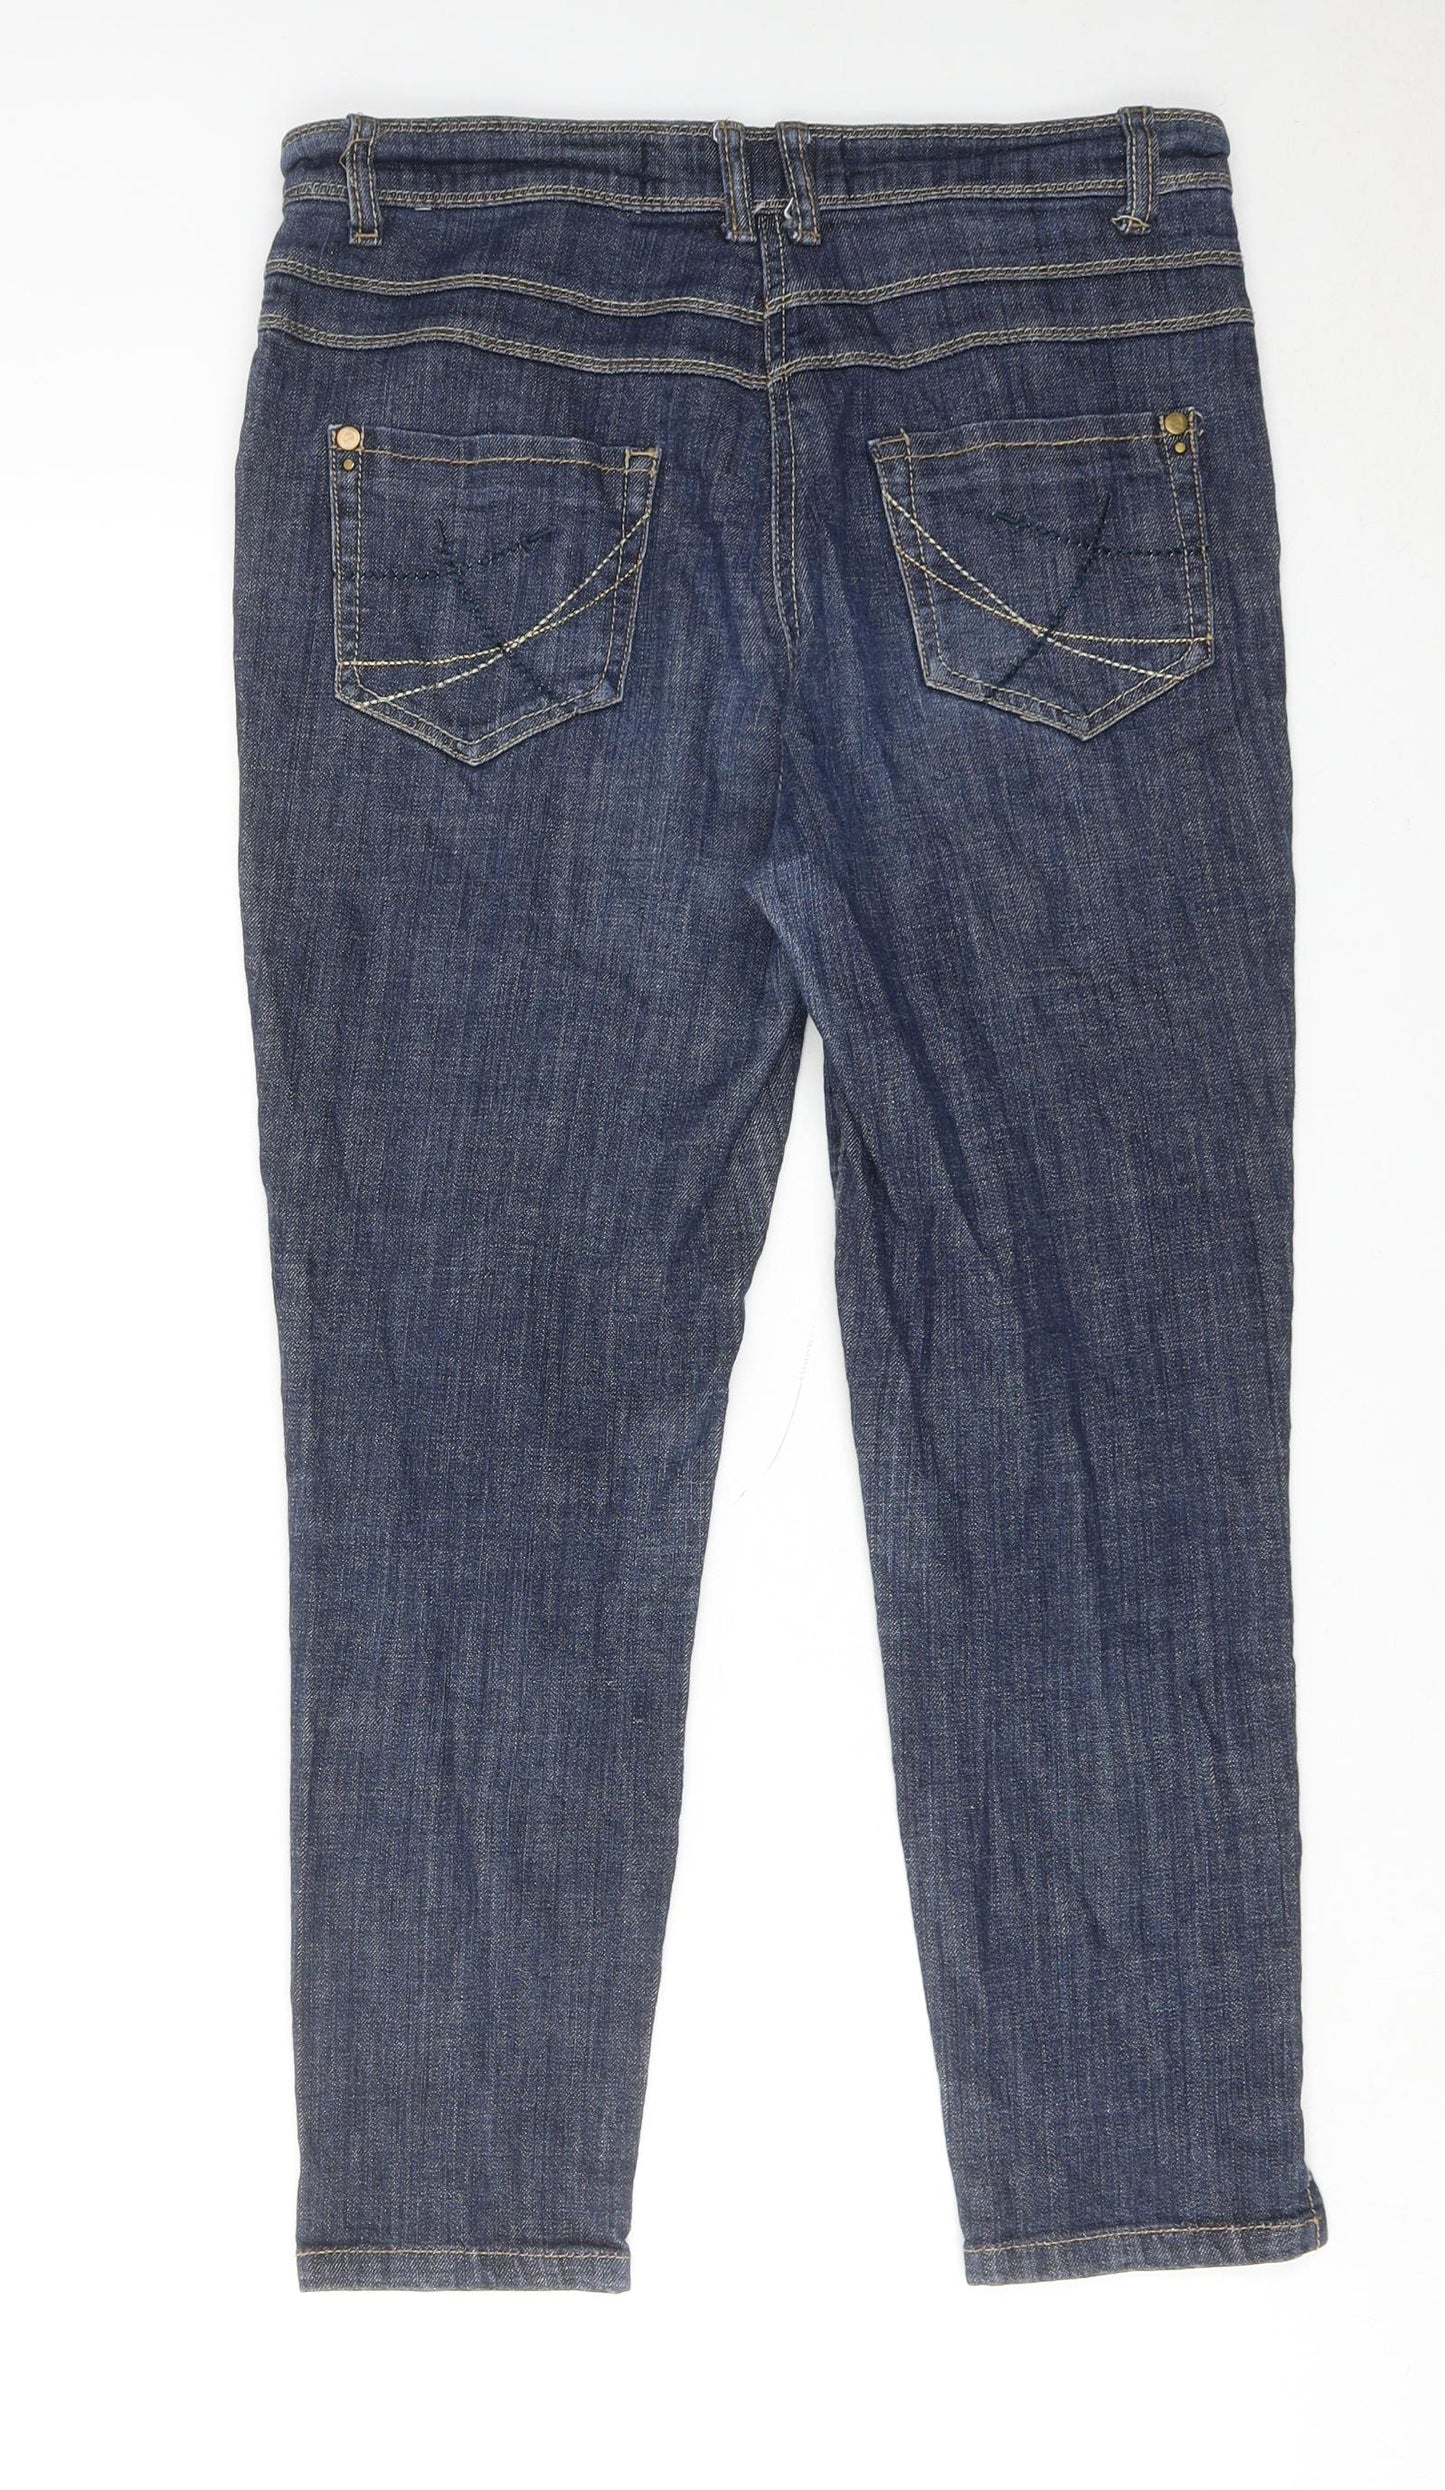 Internacionale Womens Blue Cotton Skinny Jeans Size 12 Regular Zip